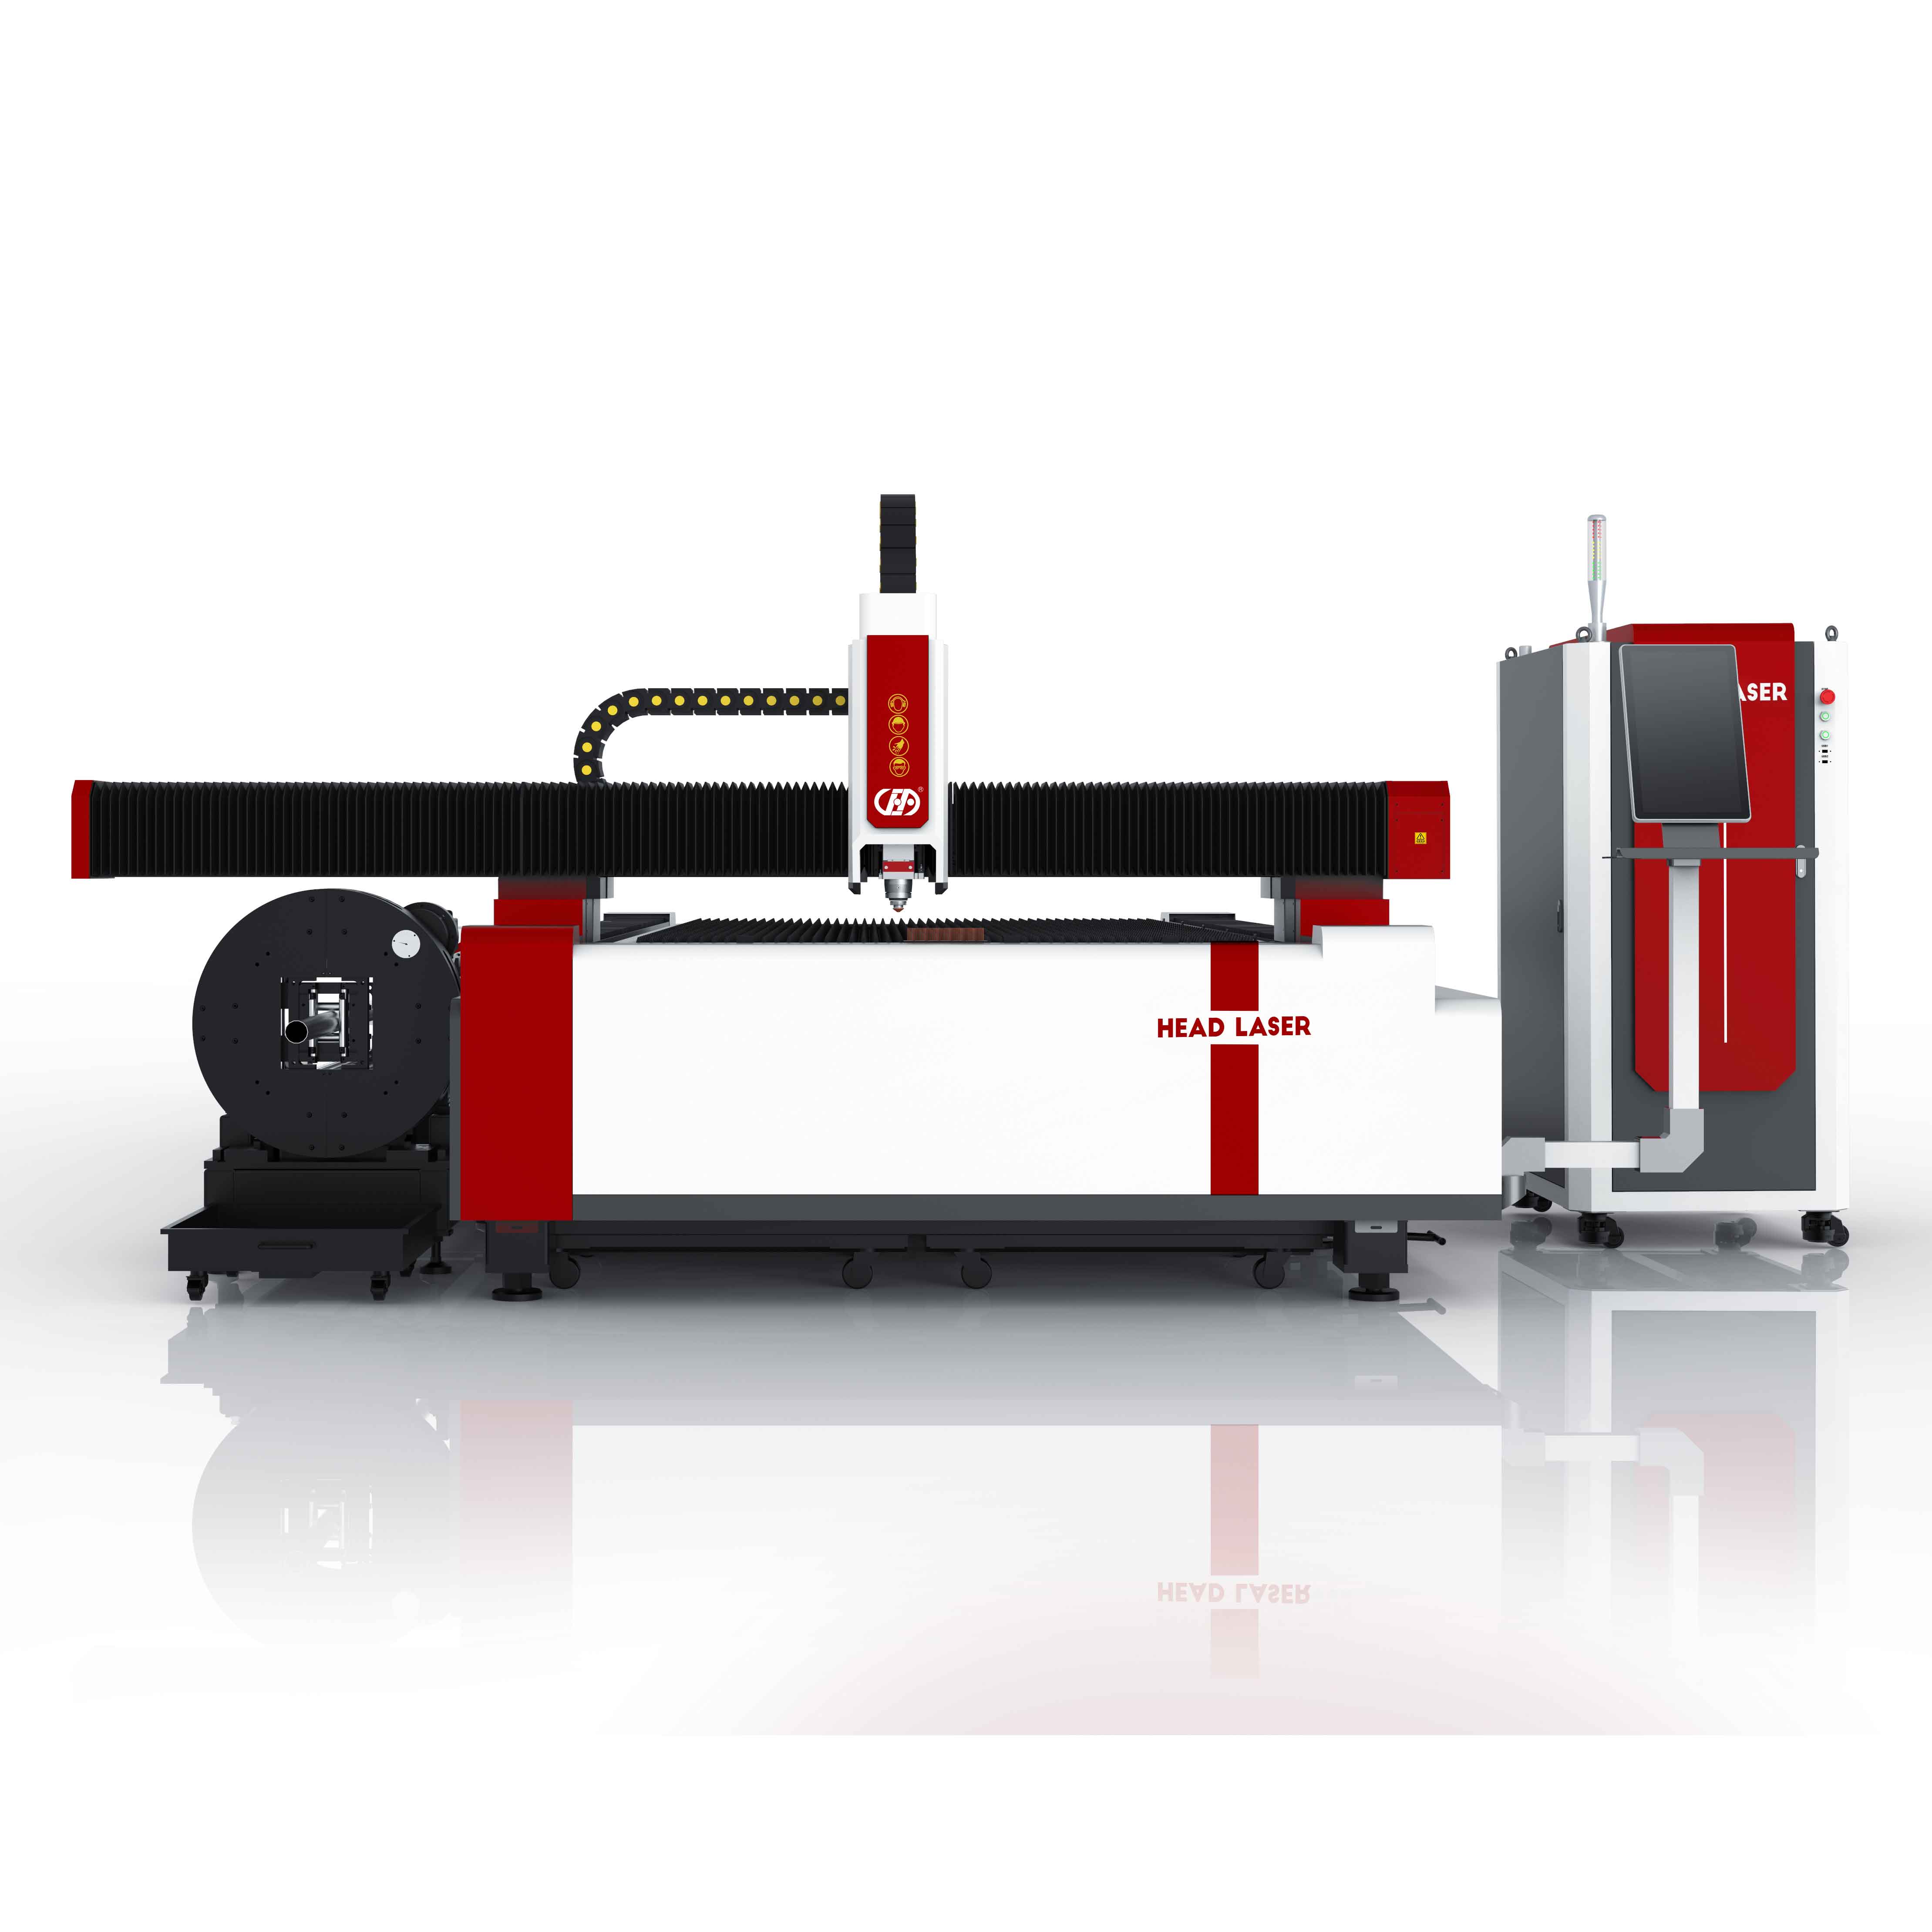 Fiber Laser Cutting Machine Factory Price